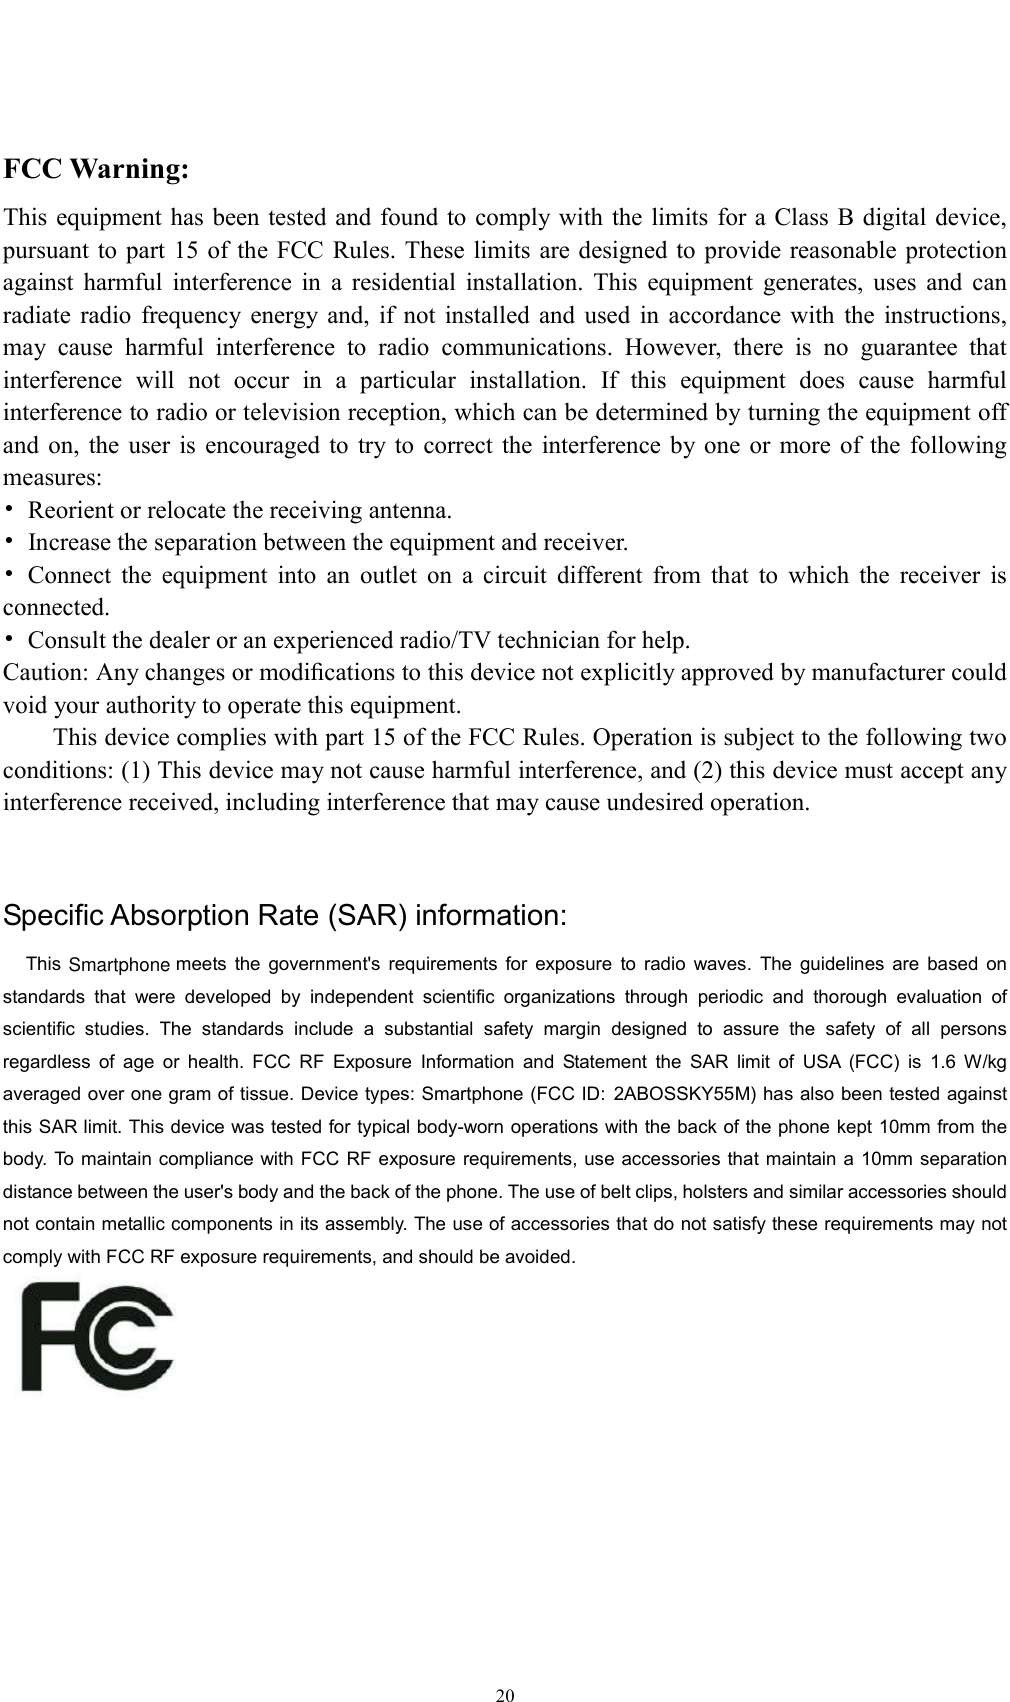 Page 20 of Sky Phone SKY55M Smartphone User Manual 